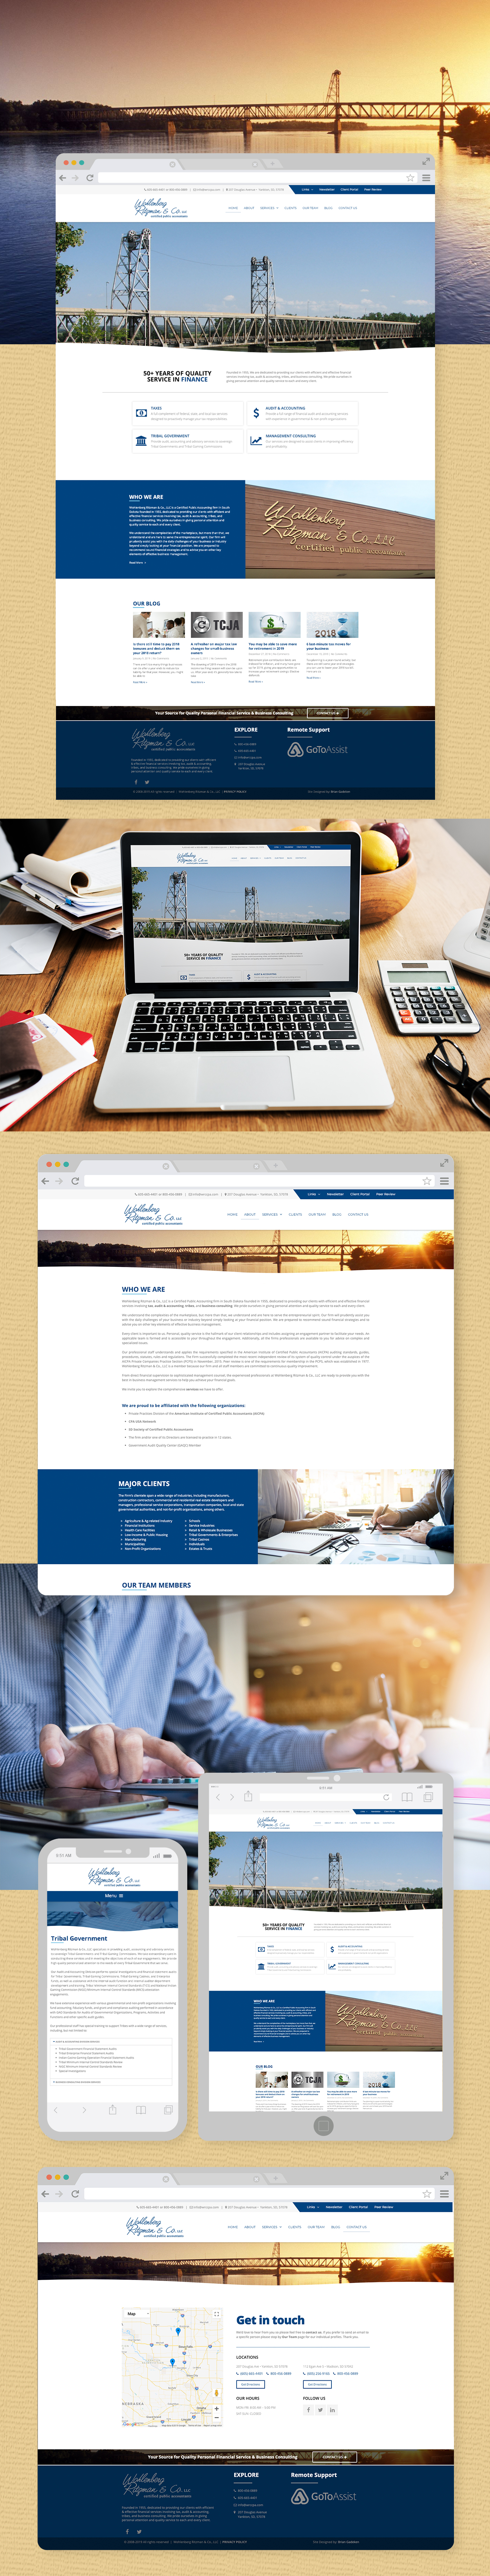 Wohlenberg Ritzman & CO website layout.